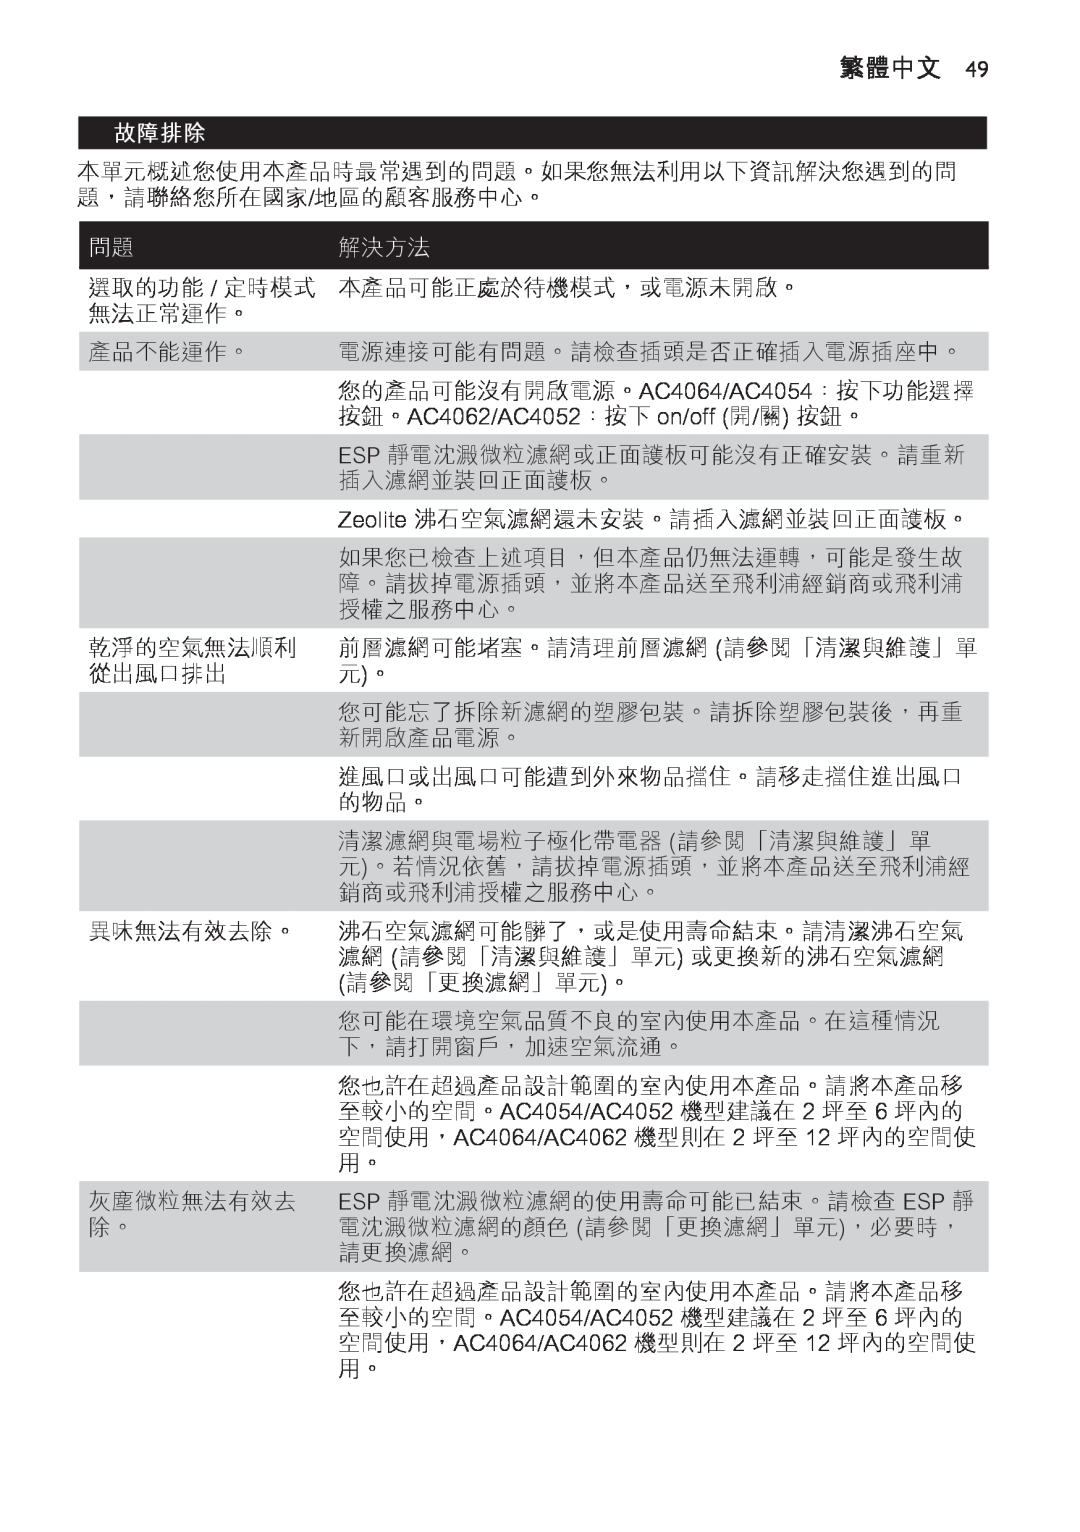 Philips AC4108, AC4118 manual 故障排除, 問題解決方法, 繁體中文 